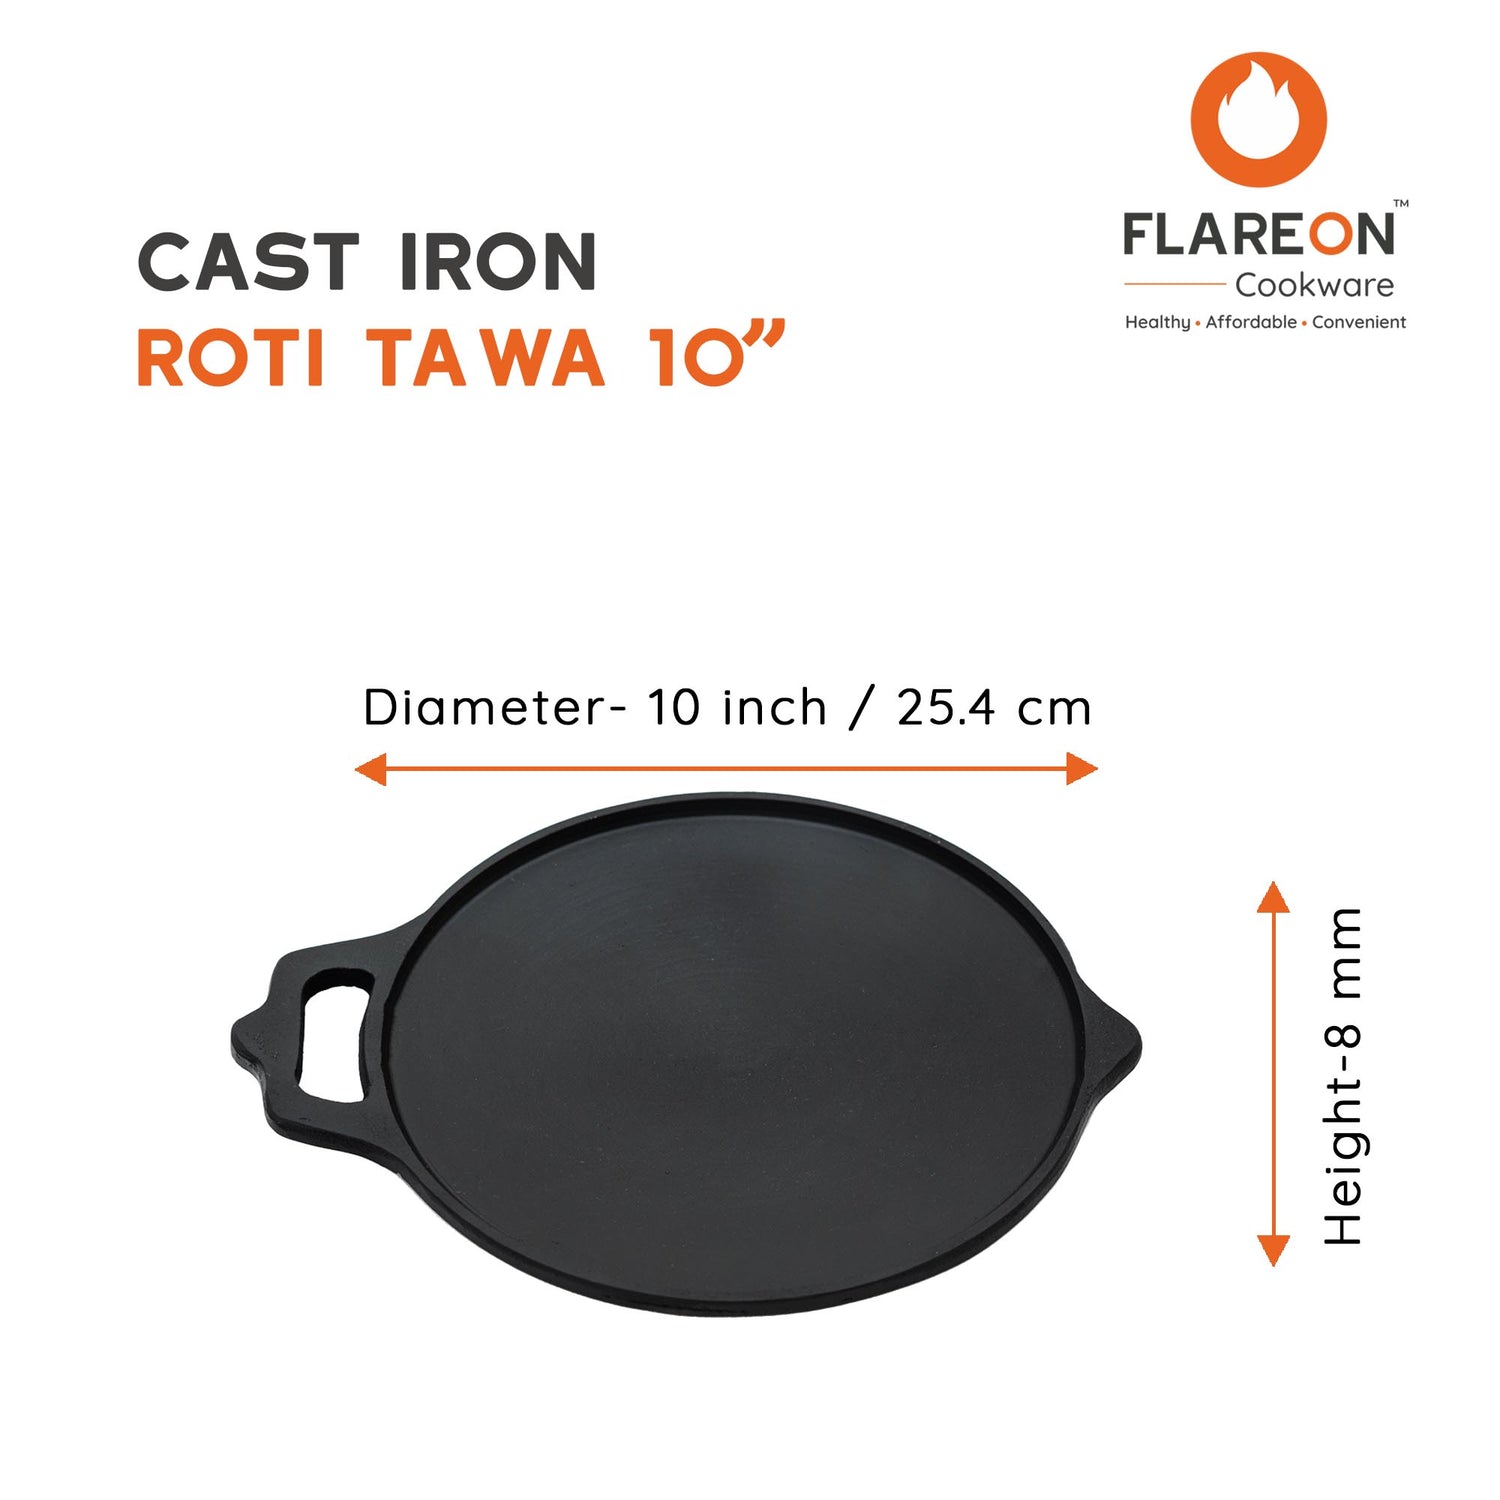 FlareOn's Cast Iron 10 Inch Roti Tawa- Product Dimensions